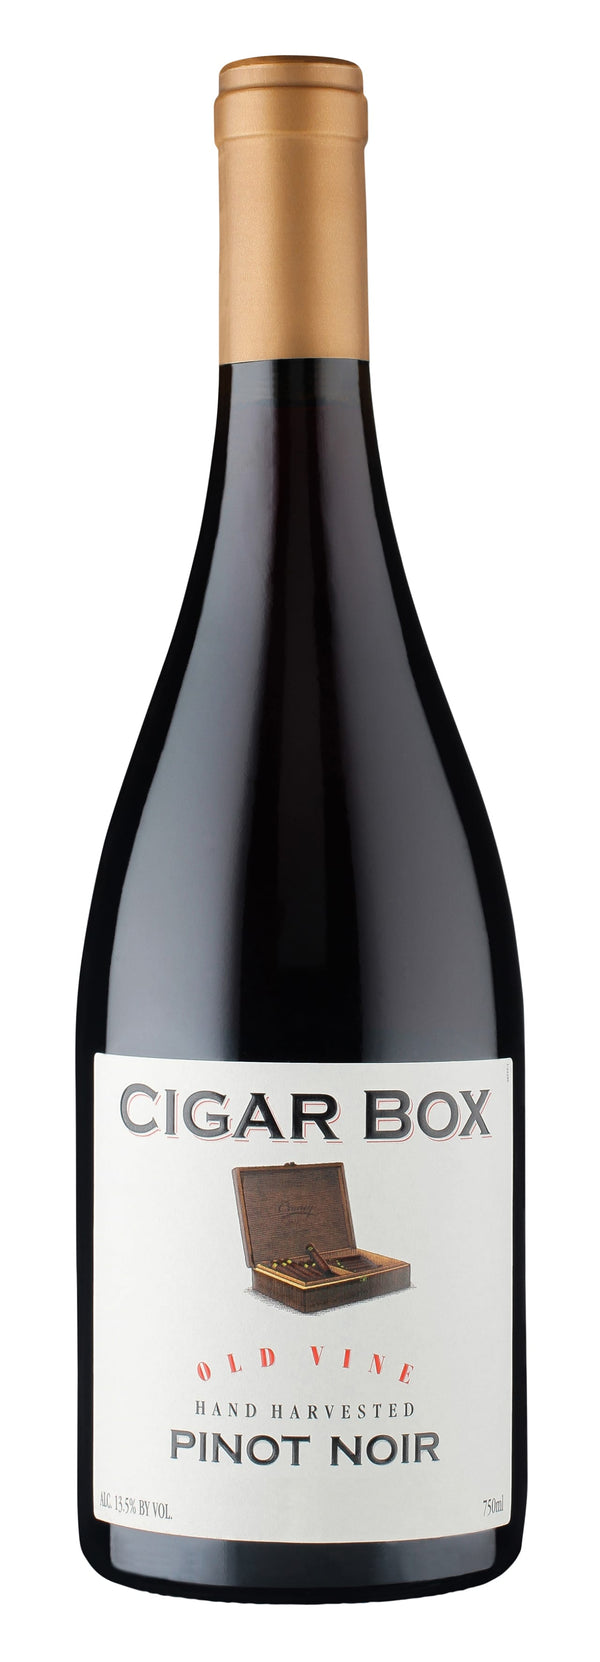 Cigar Box Pinot Noir, Chile